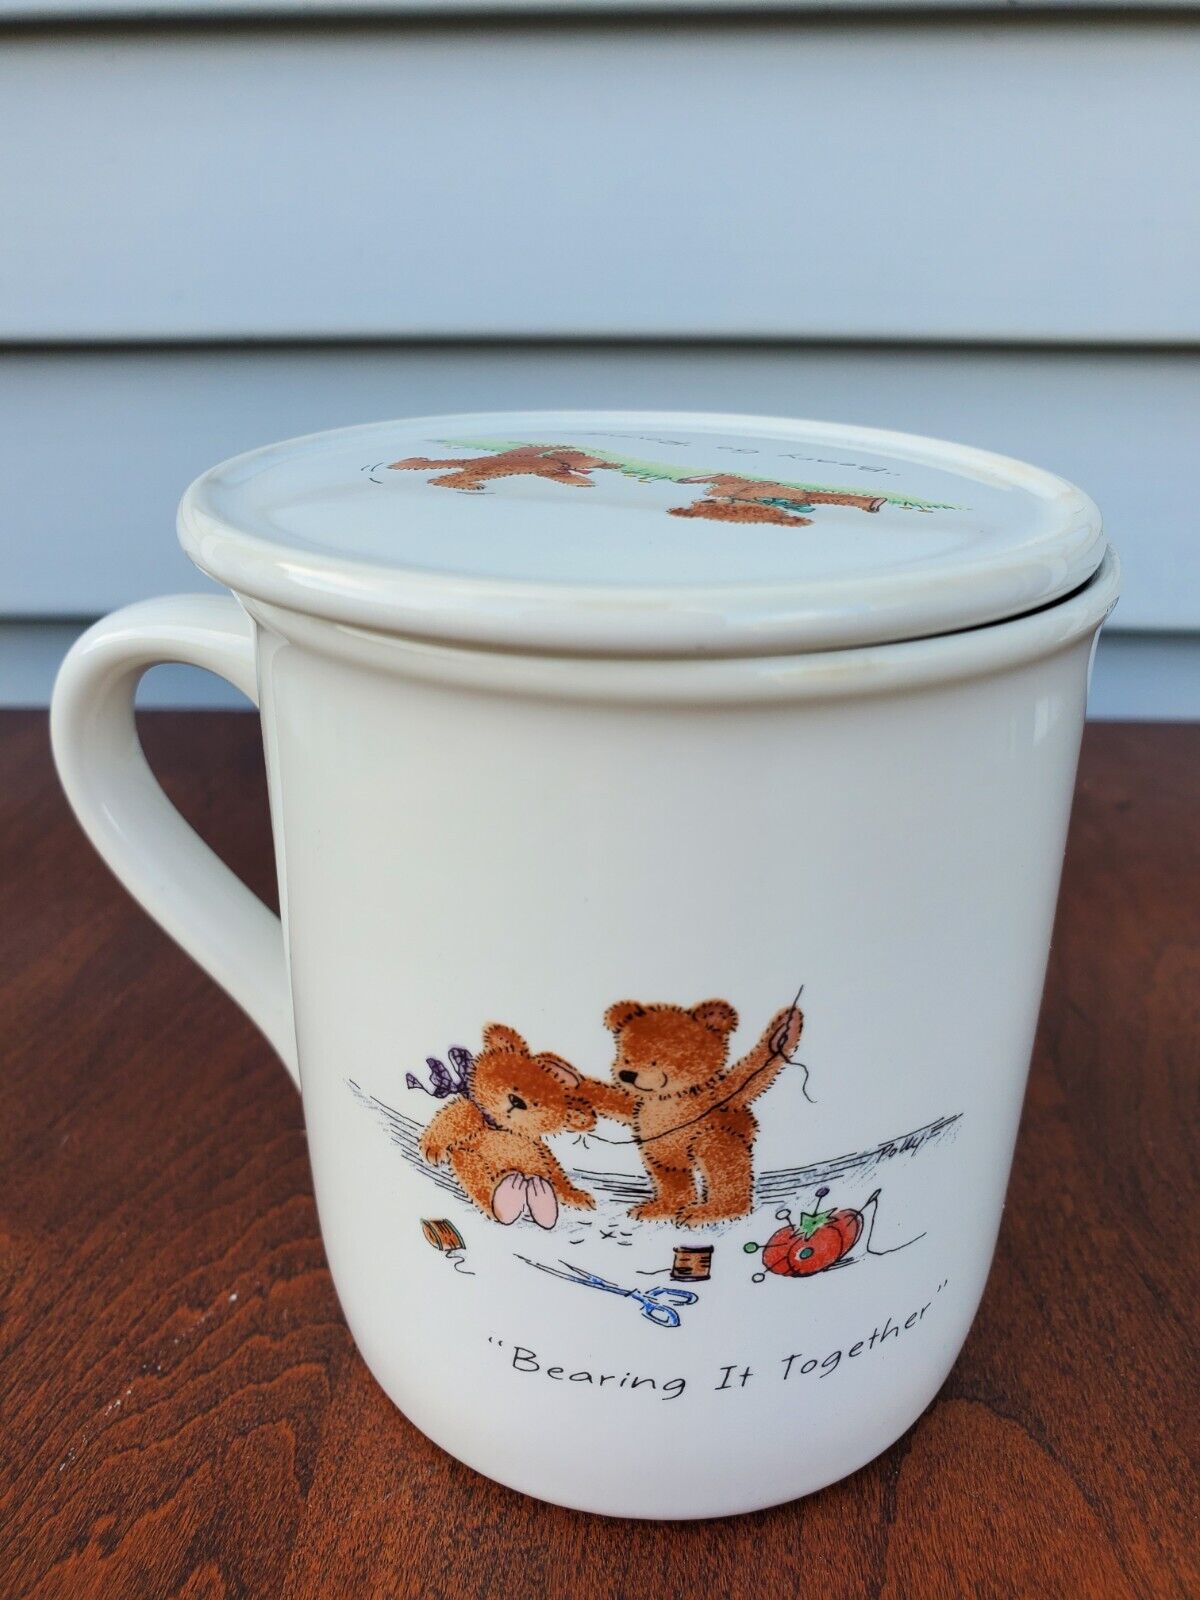 Vtg Hallmark Mug Mates Beary Best Friends Ceramic Coffee Mug Cup With Lid 1985